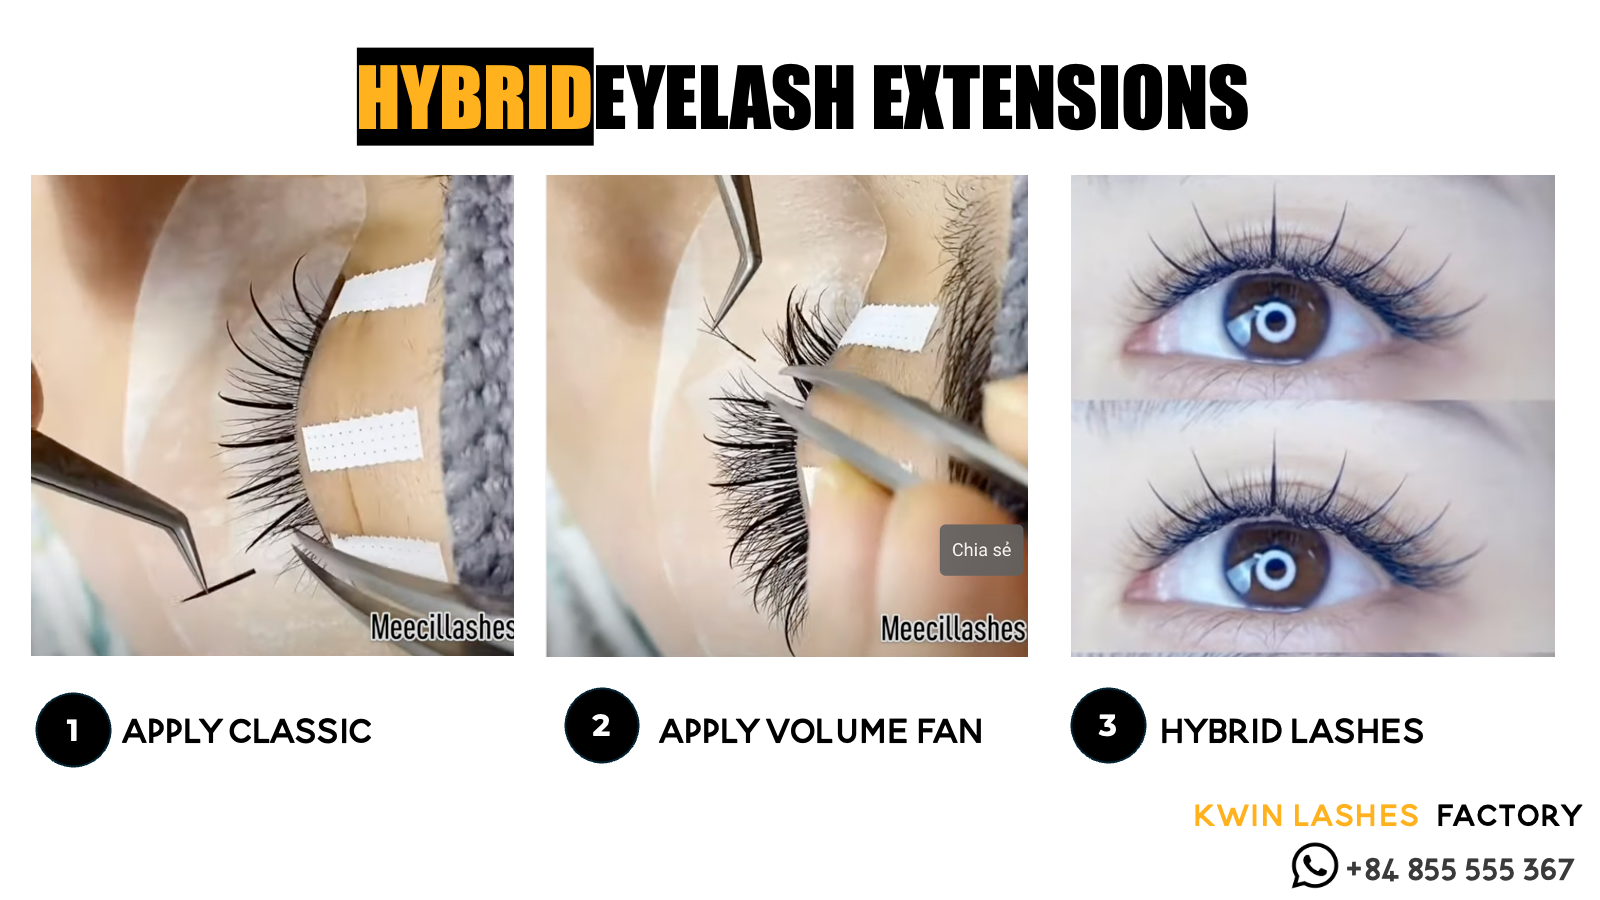 3 steps of hybrid eyelash extensions application